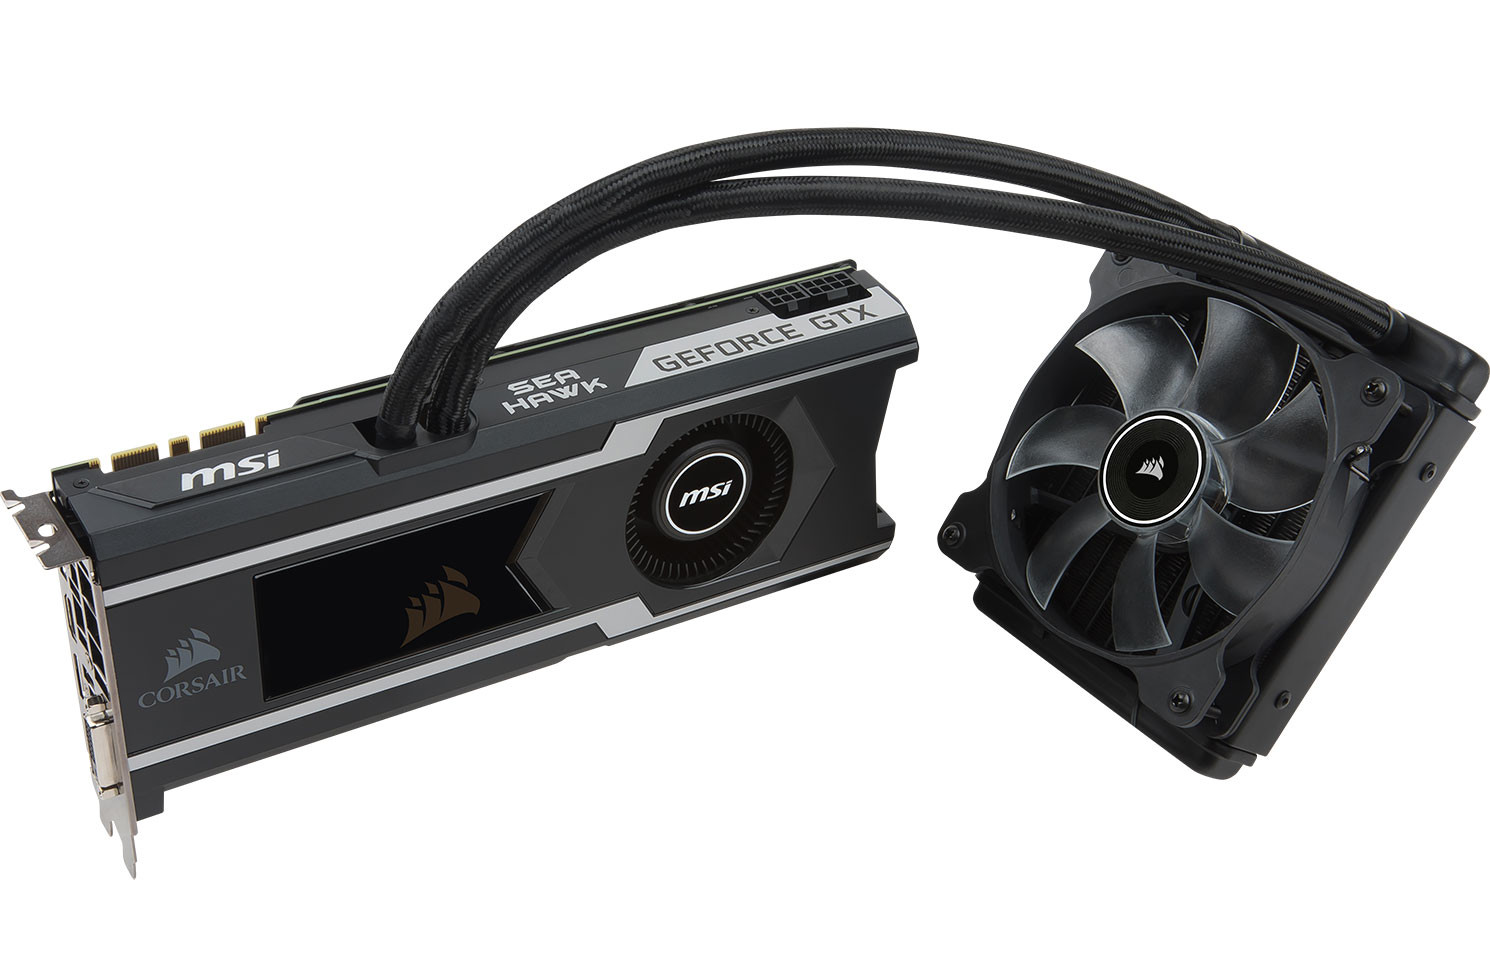 MSI Announces the GeForce GTX 1080 Ti Sea Hawk Gaming Graphics